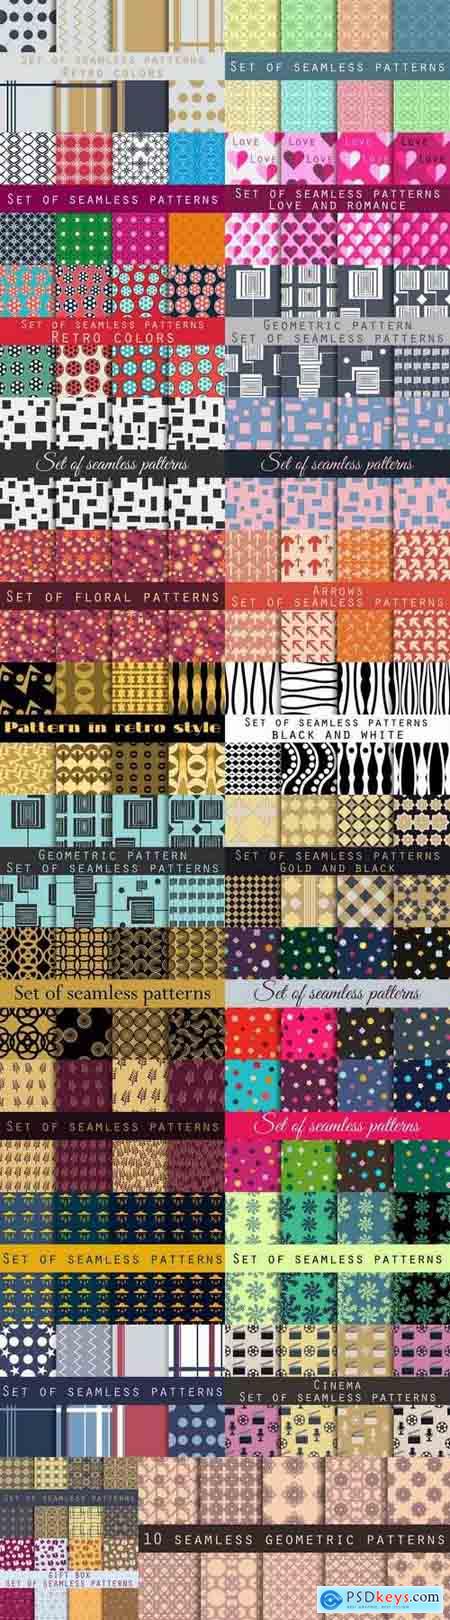 Wallpaper pattern background is 25 EPS